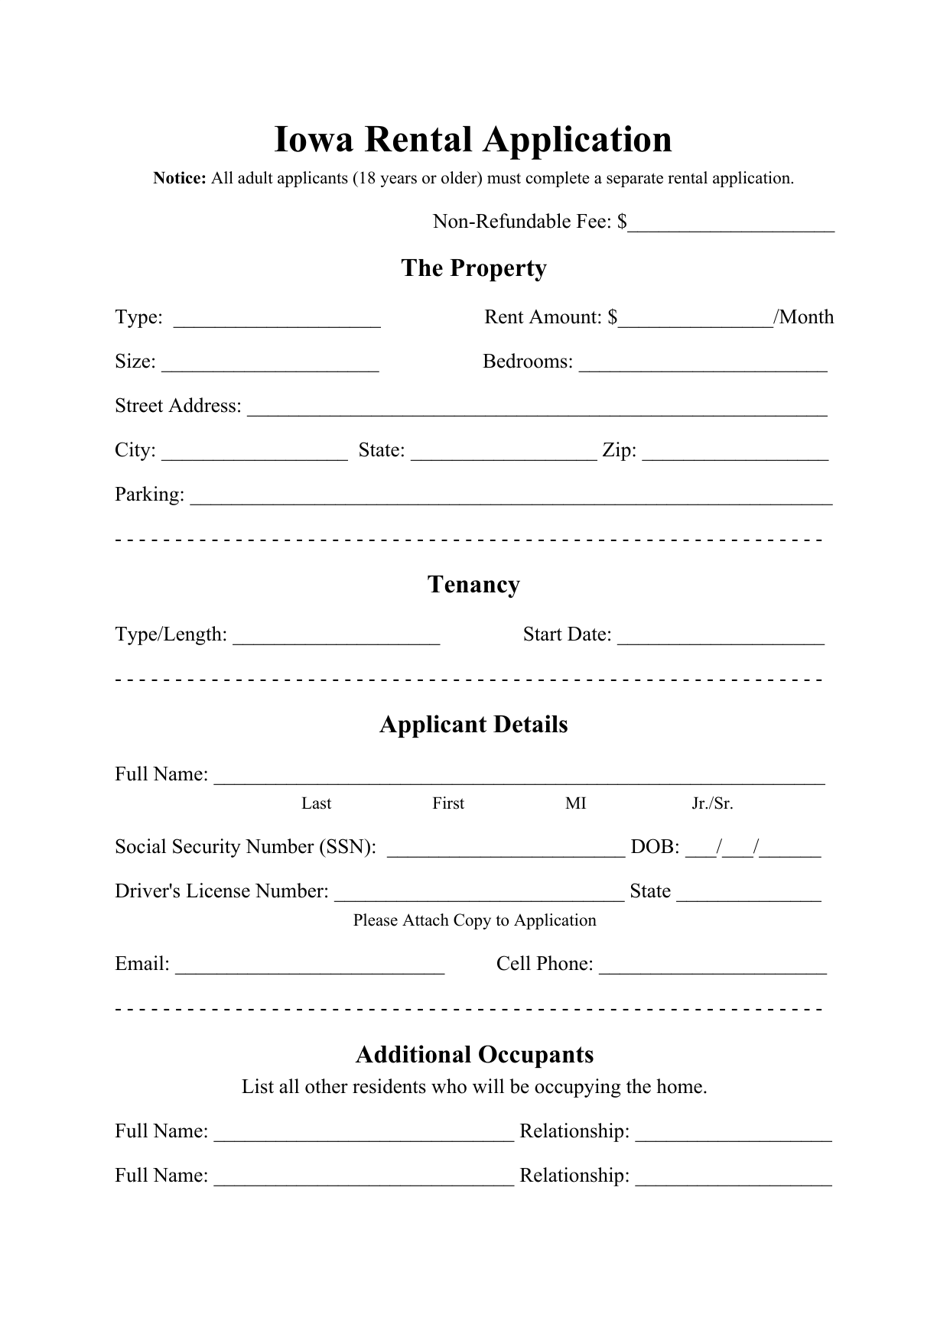 Rental Application Form - Iowa, Page 1